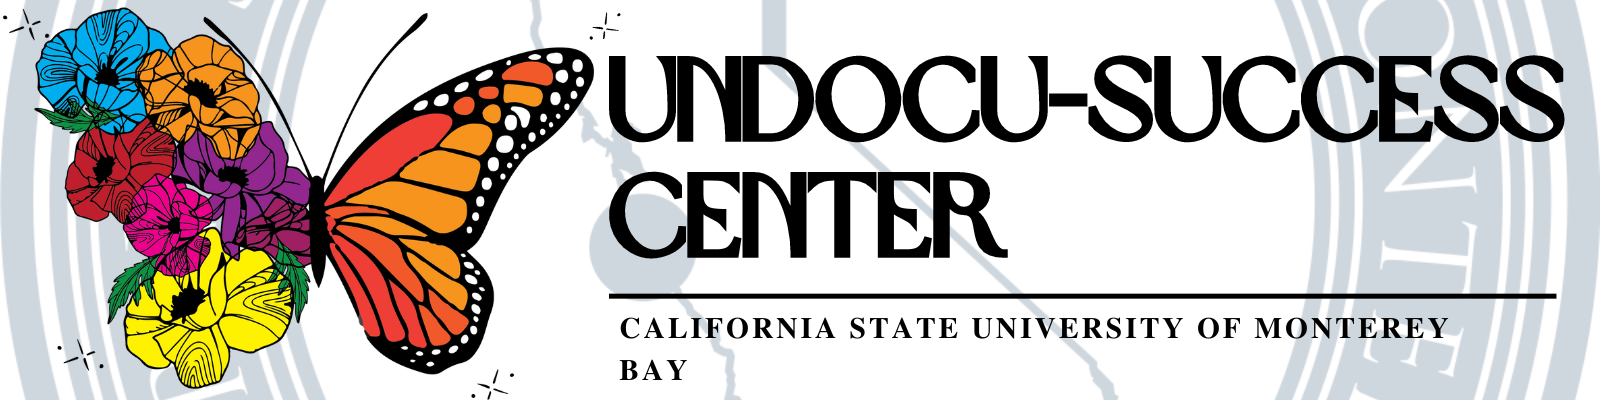 Undocu-Success Center Banner